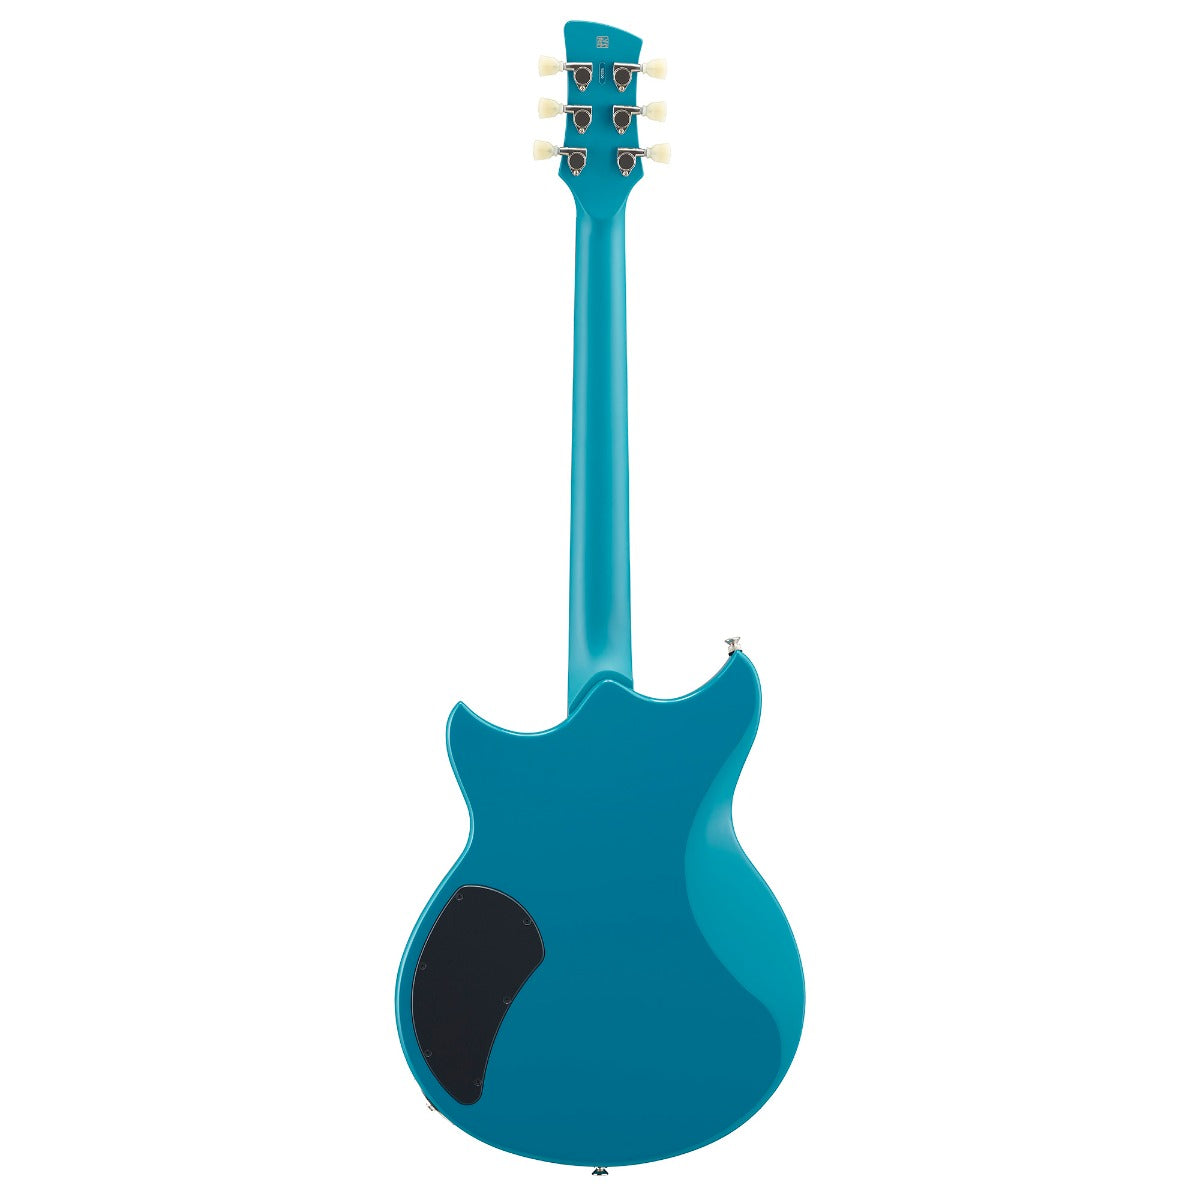 Yamaha RSE20 Revstar Element Electric Guitar - Swift Blue, View 4